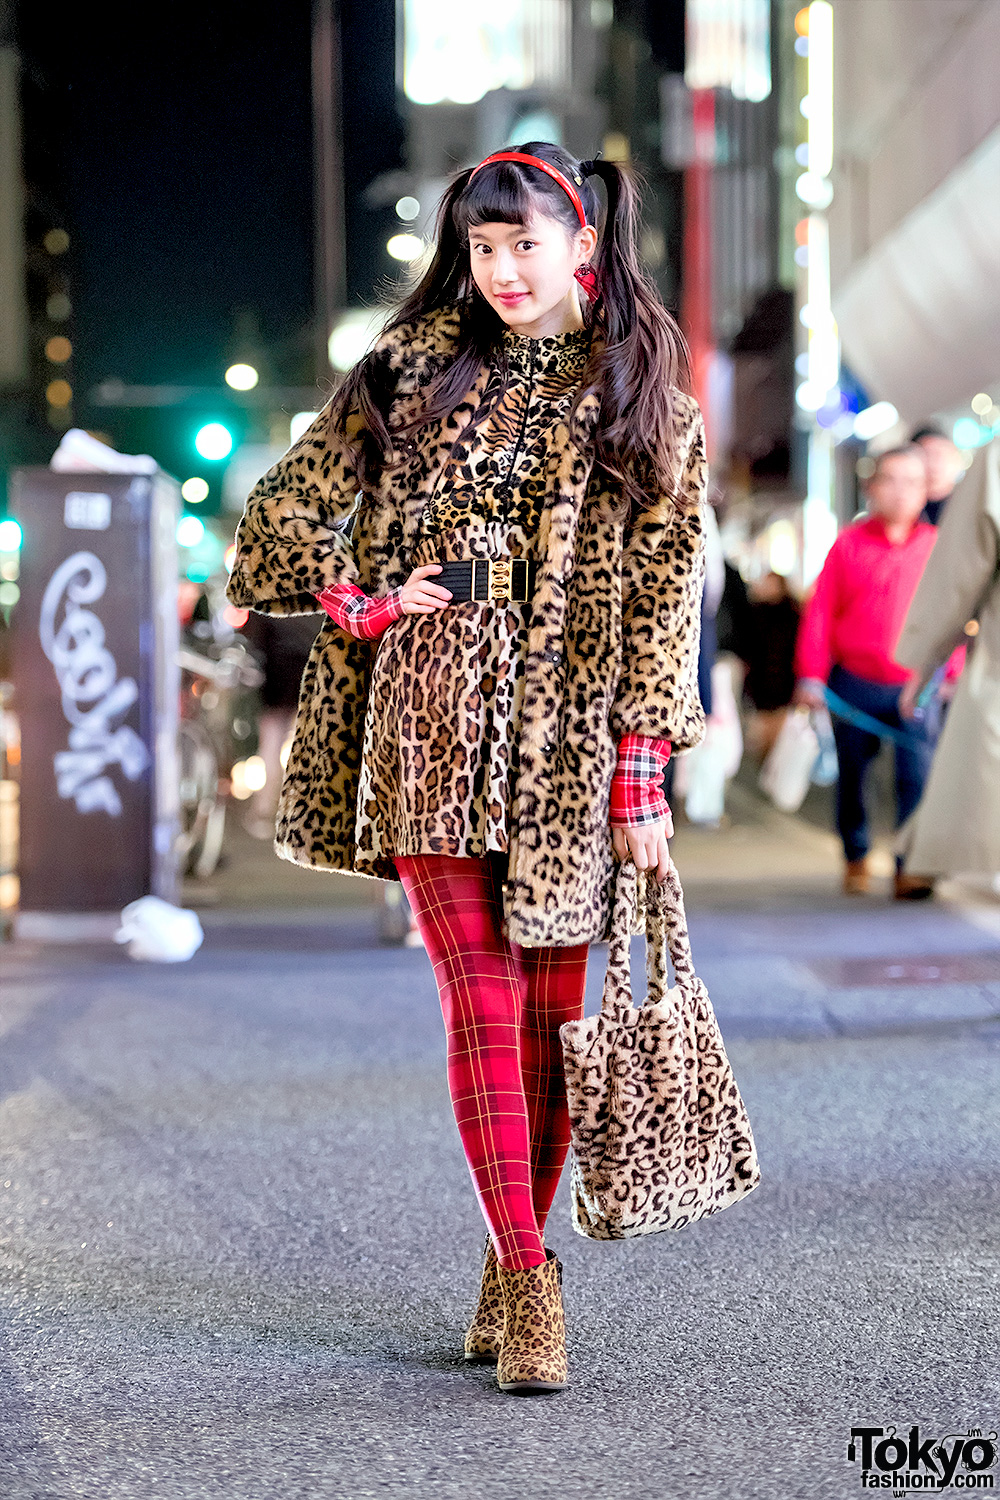 Harajuku Teen Street Style w/ Leopard Print Coat Over Leopard Dress, Leopard Booties & Leopard Bag